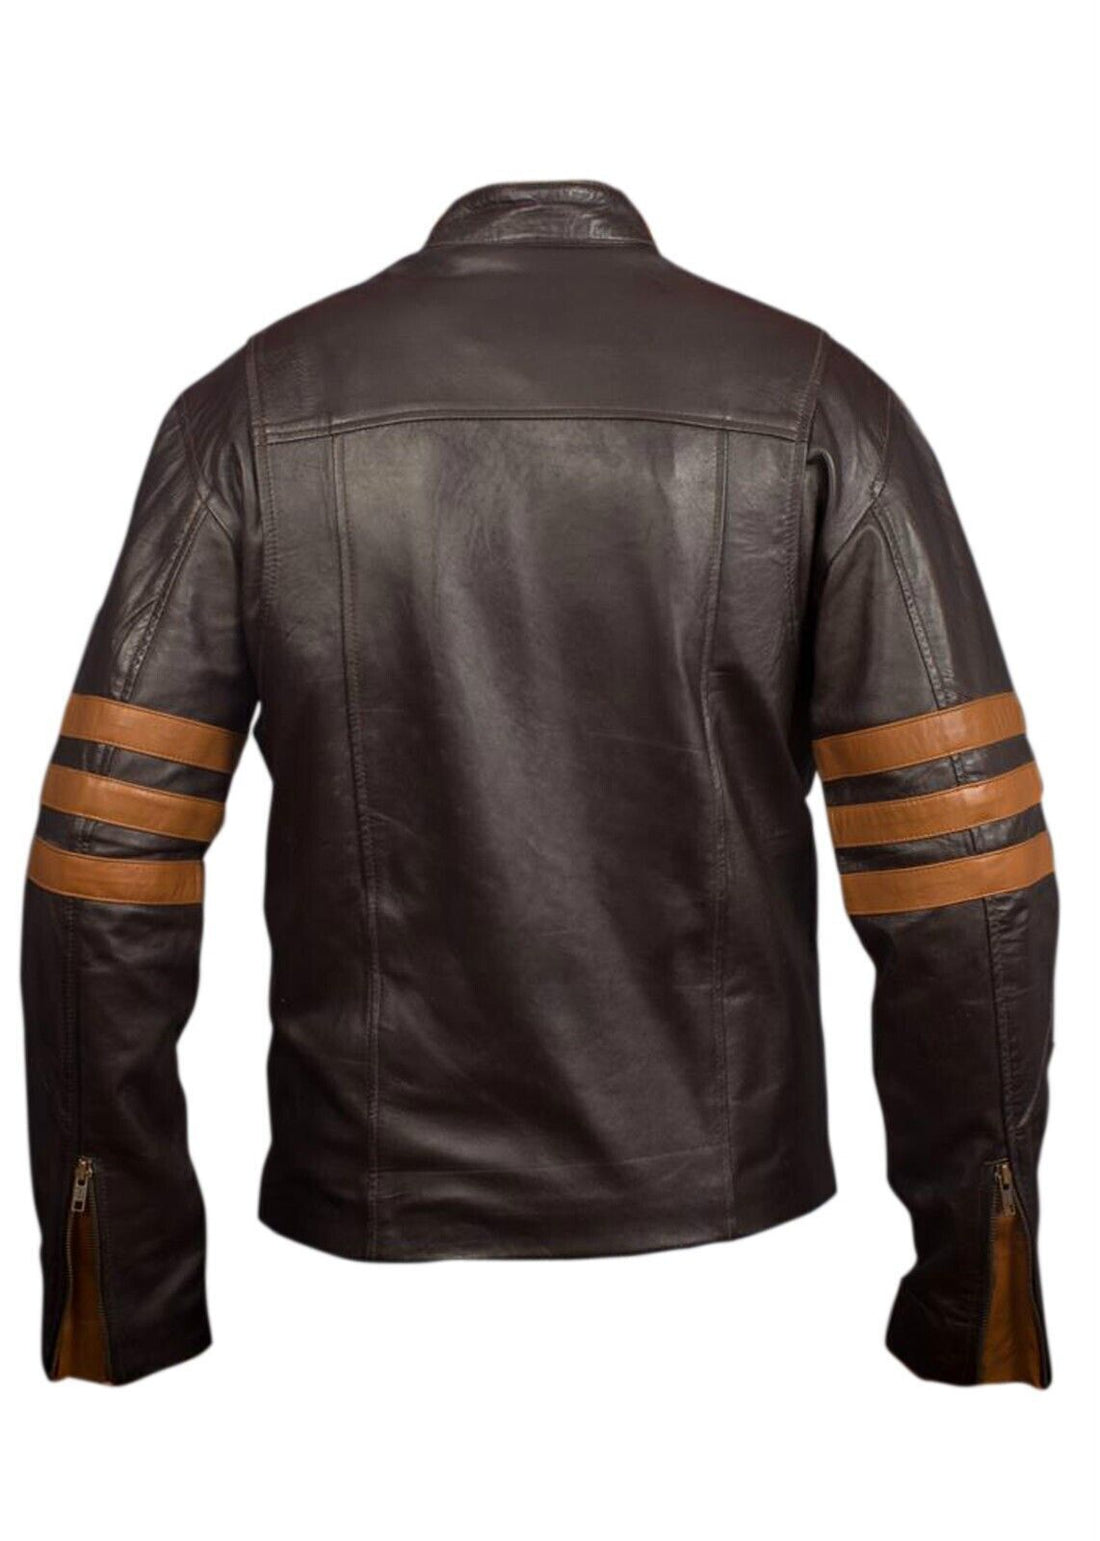 Men's X-Men Wolverine Brown Leather Jacket